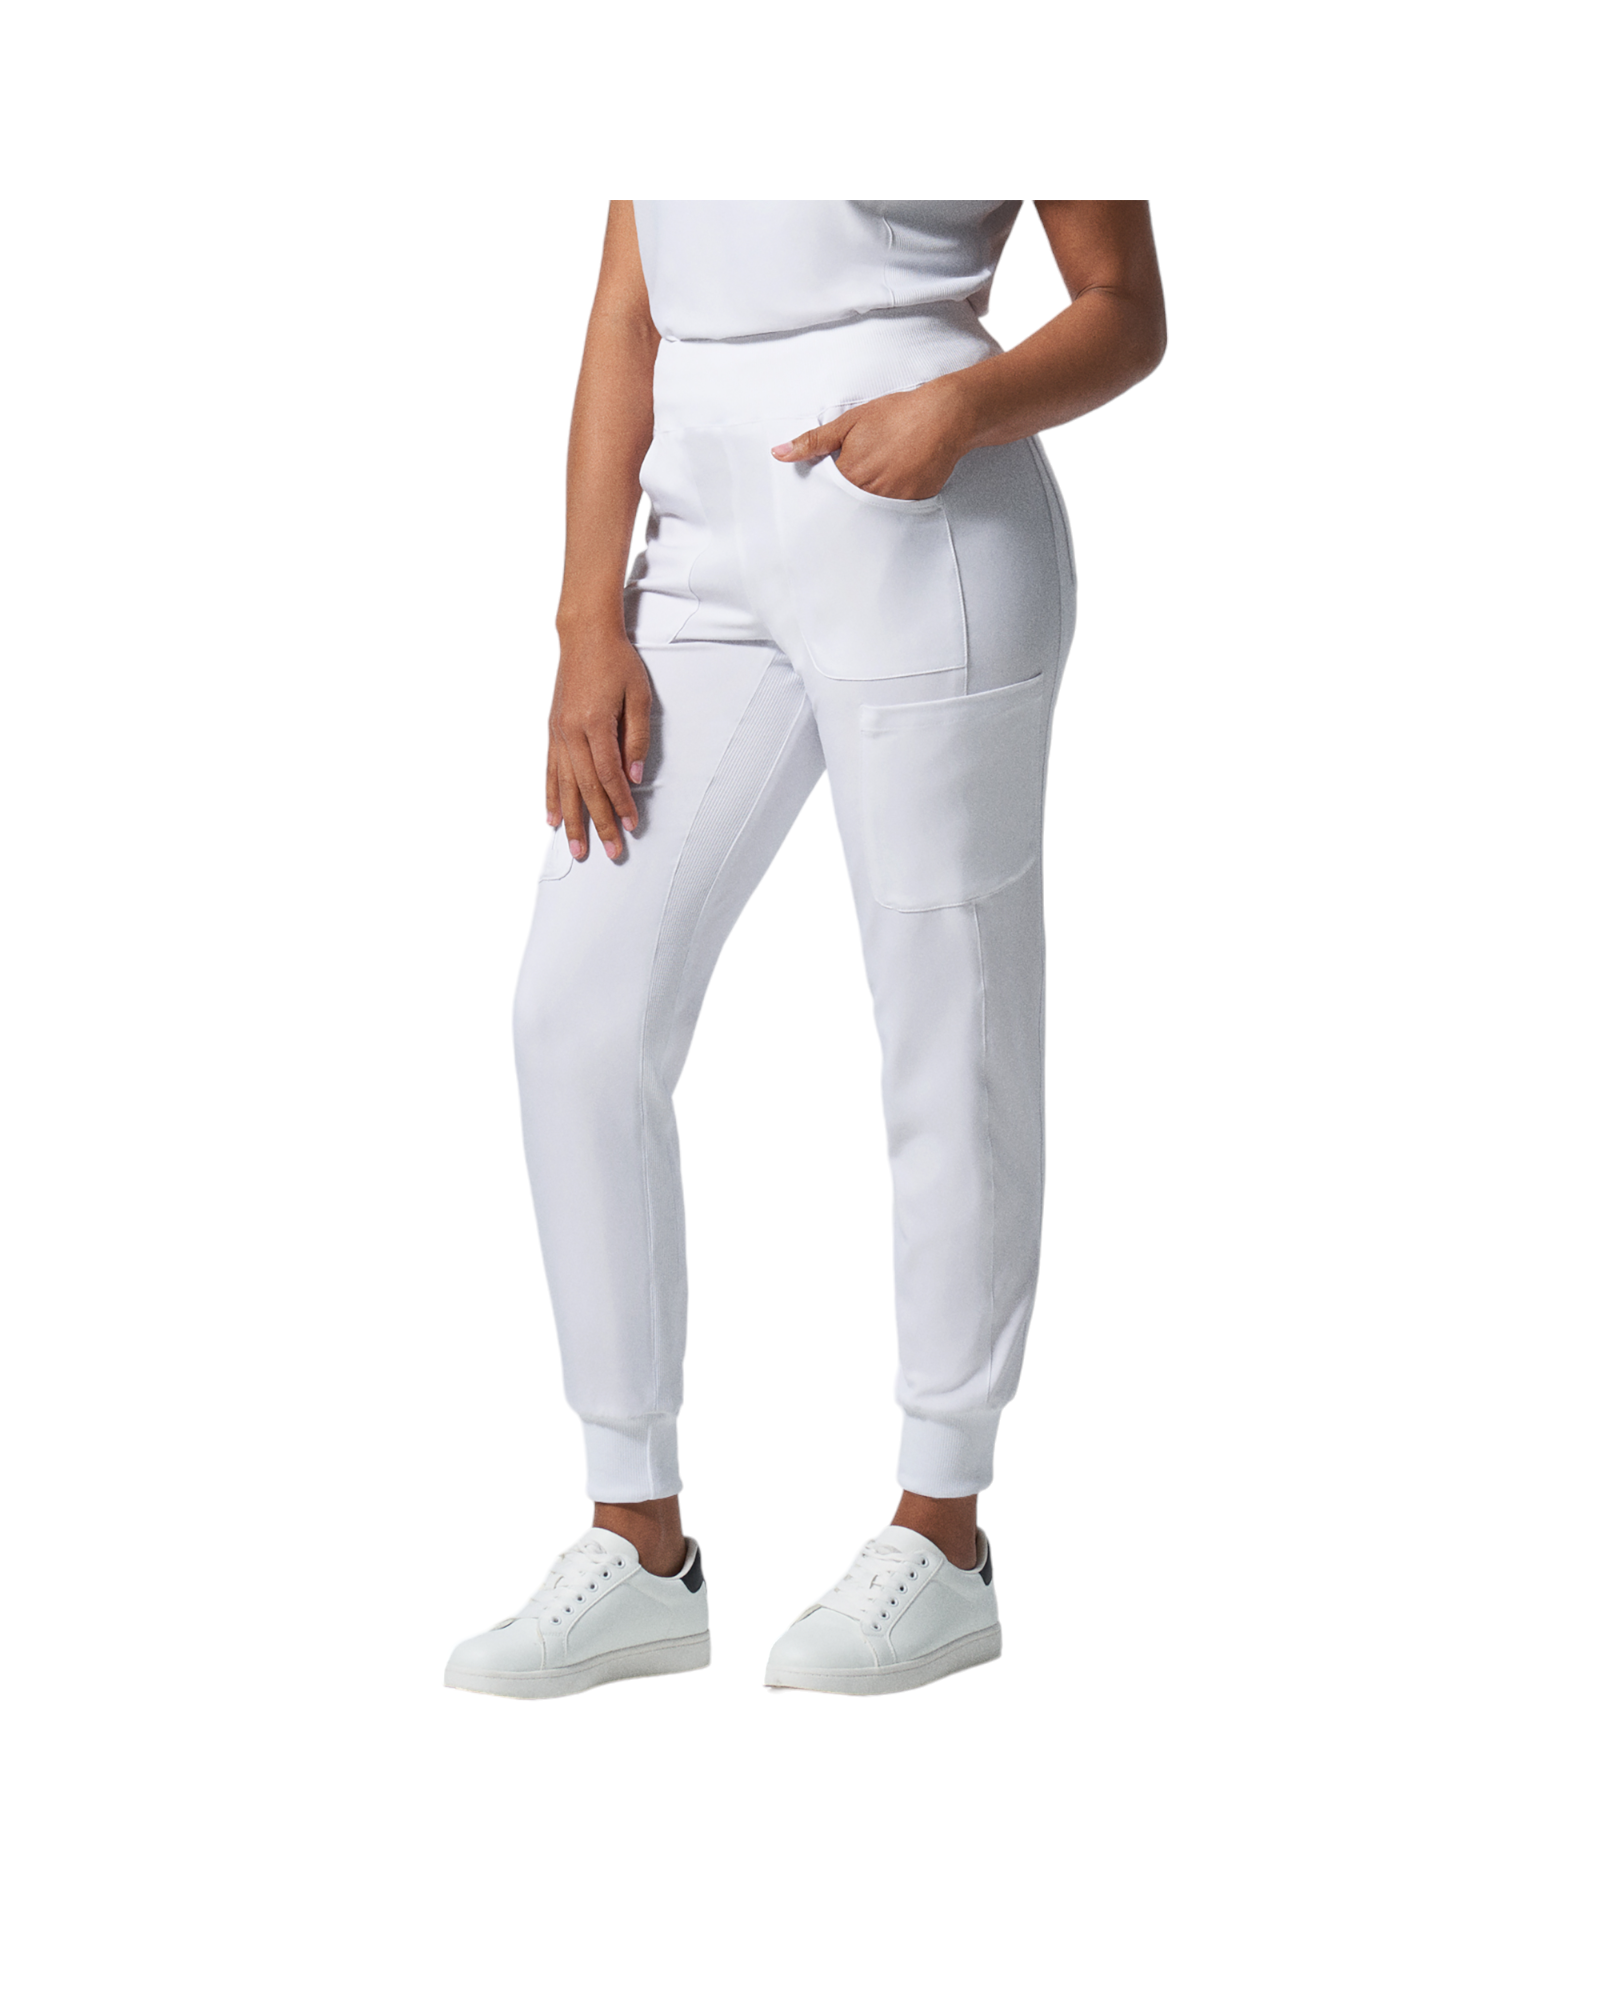 LULULEMON Jogger Pant Drawstring Back Zip Pockets Gray Women's Size 2